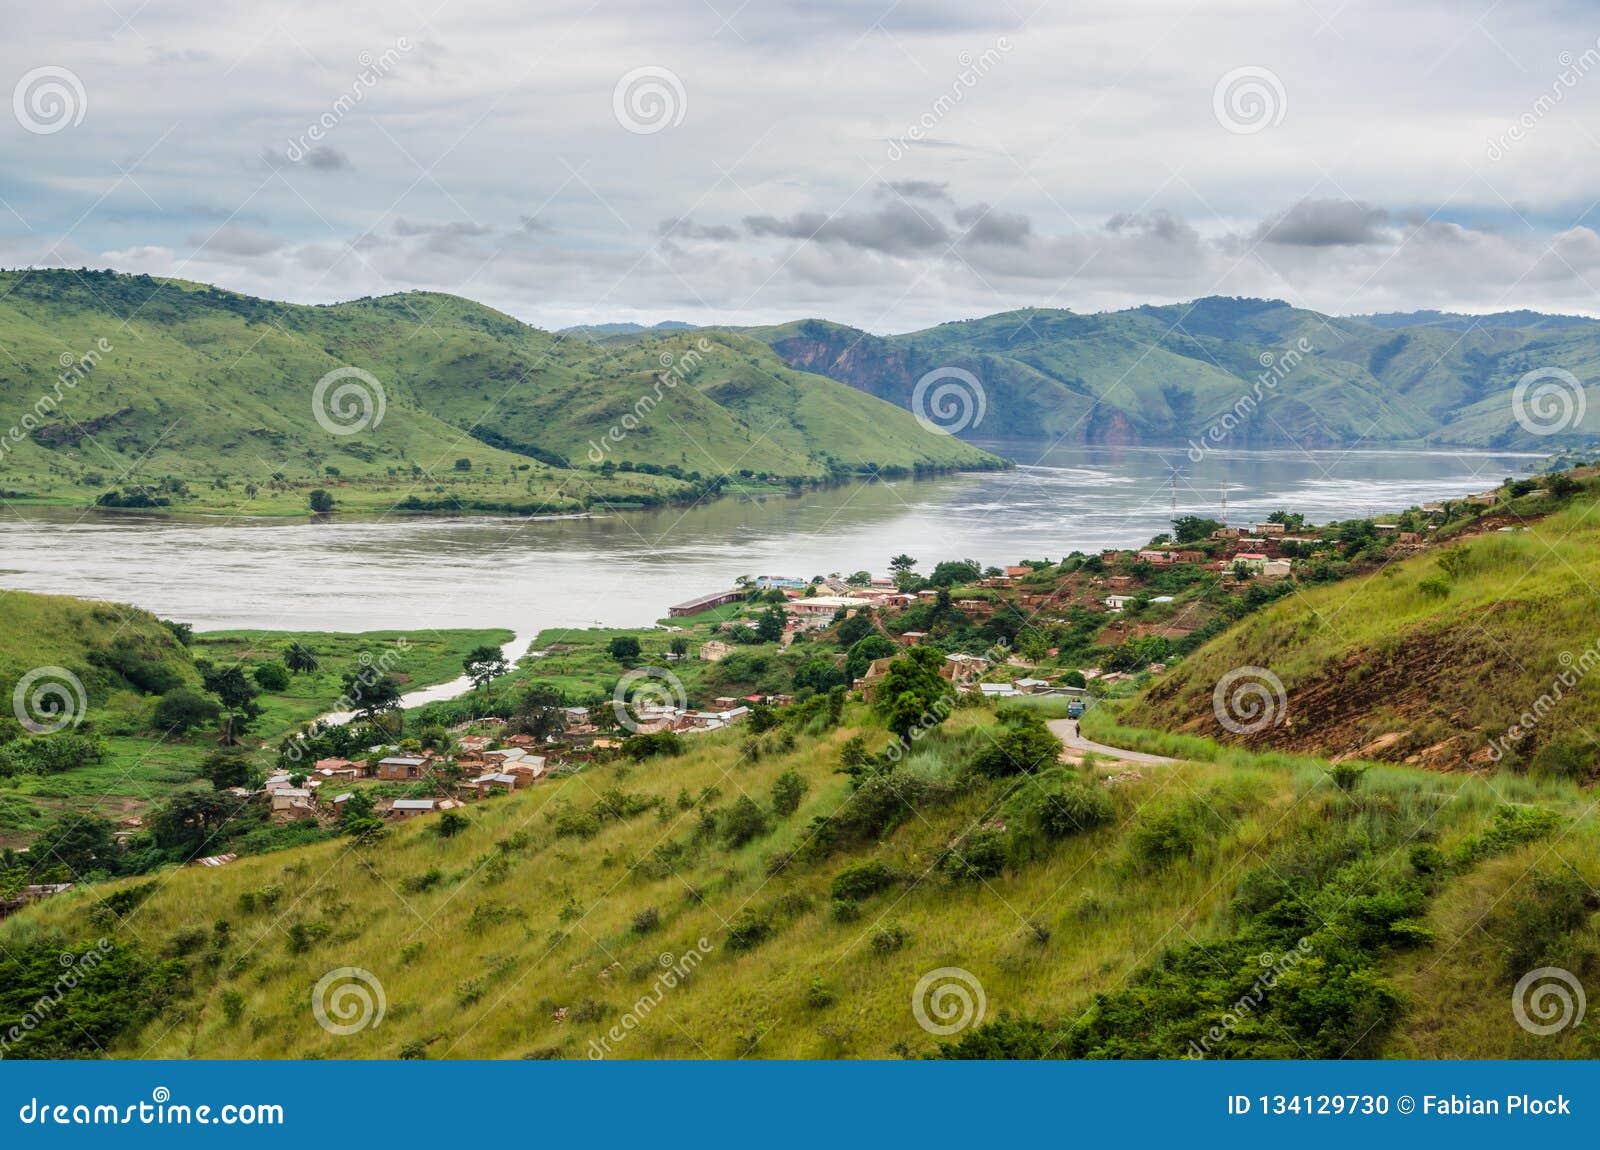 small village in green hills at congo river, democratic republic of congo, africa